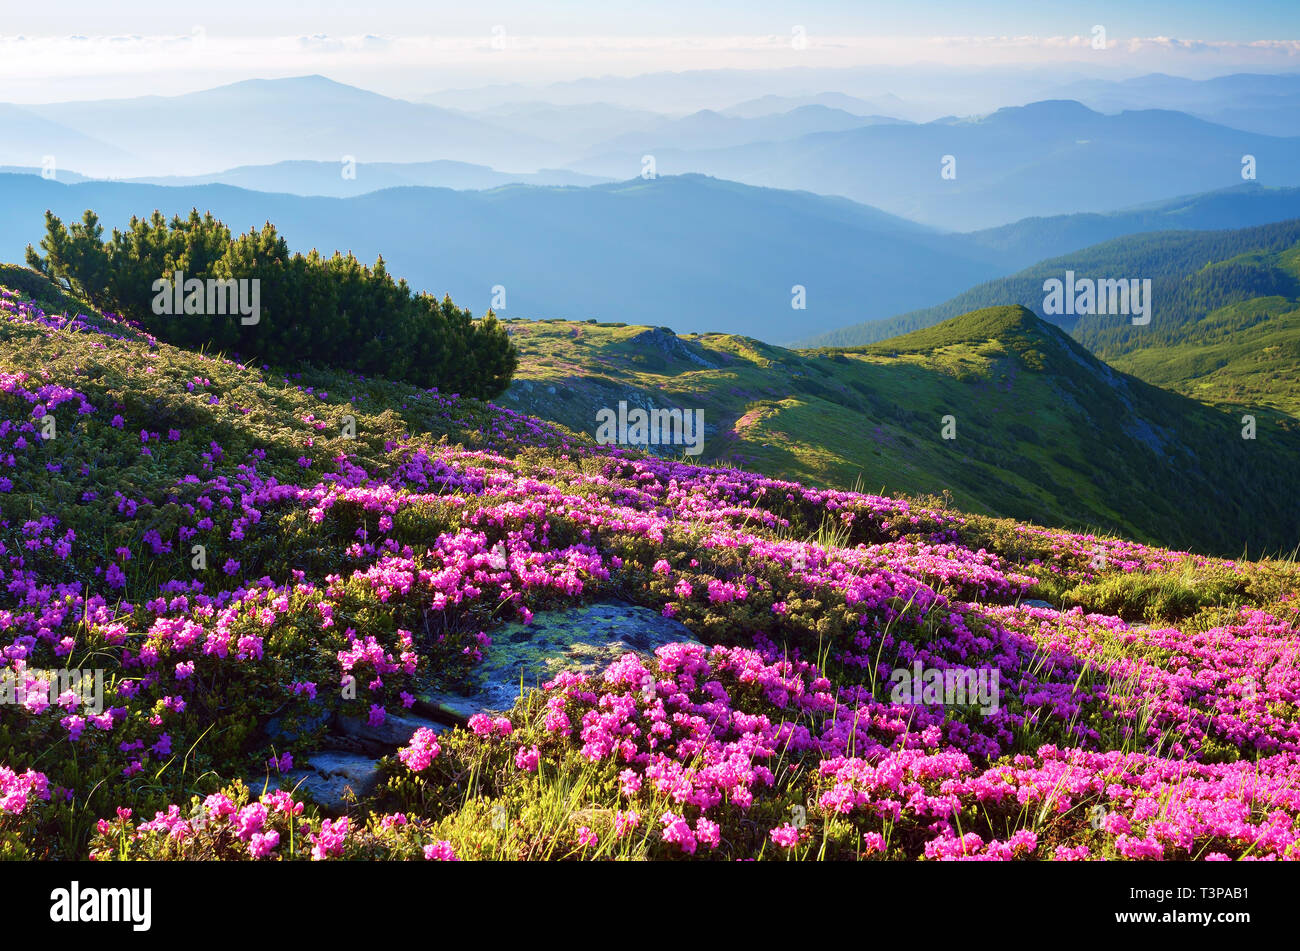 Paisaje flores fotografías e imágenes de alta resolución - Alamy